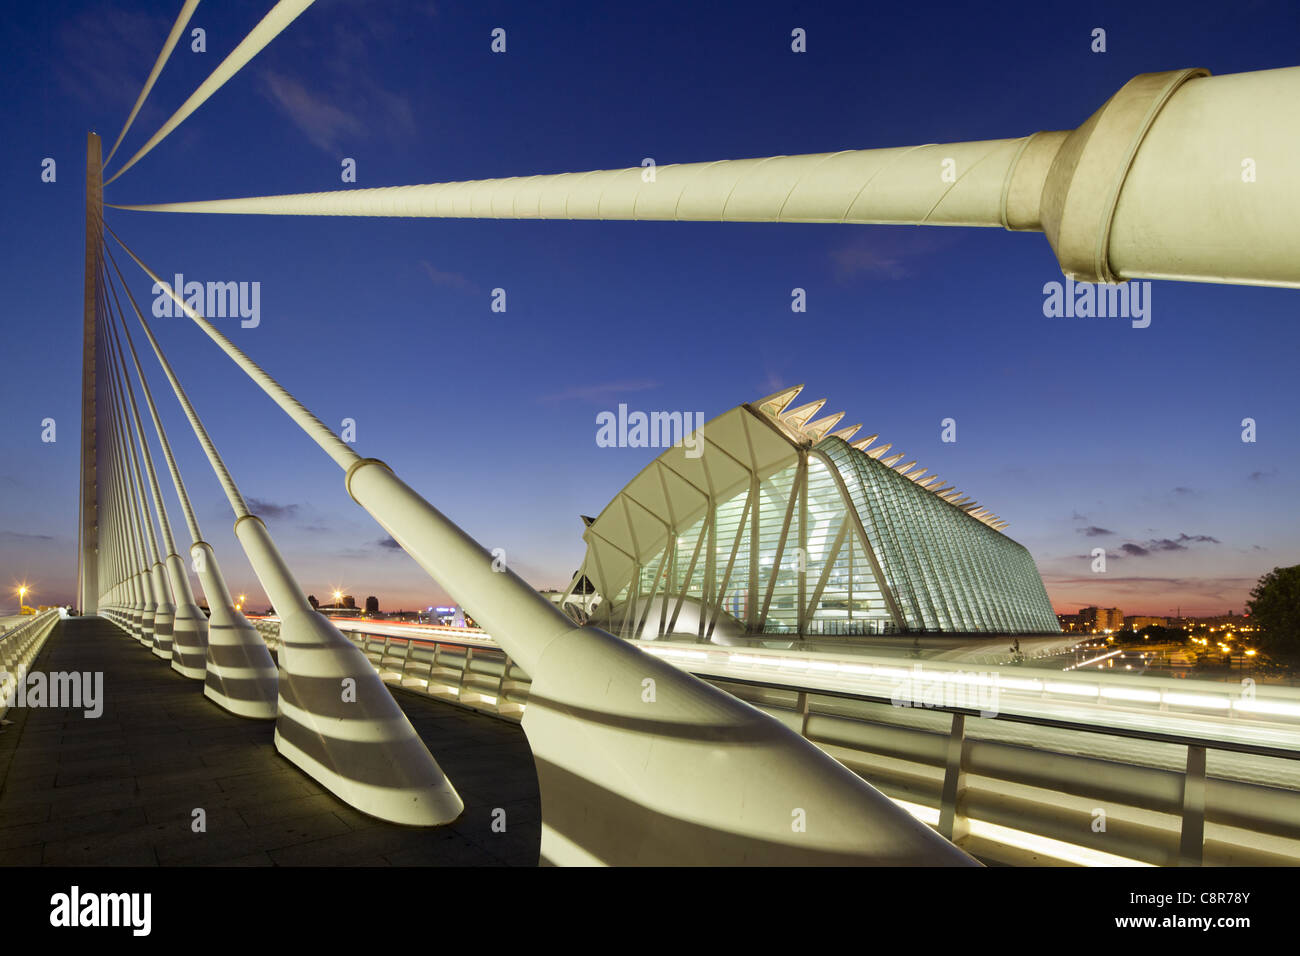 Puente de l Assut, bridge, City of sciences, Calatrava, Valencia, Spain Stock Photo